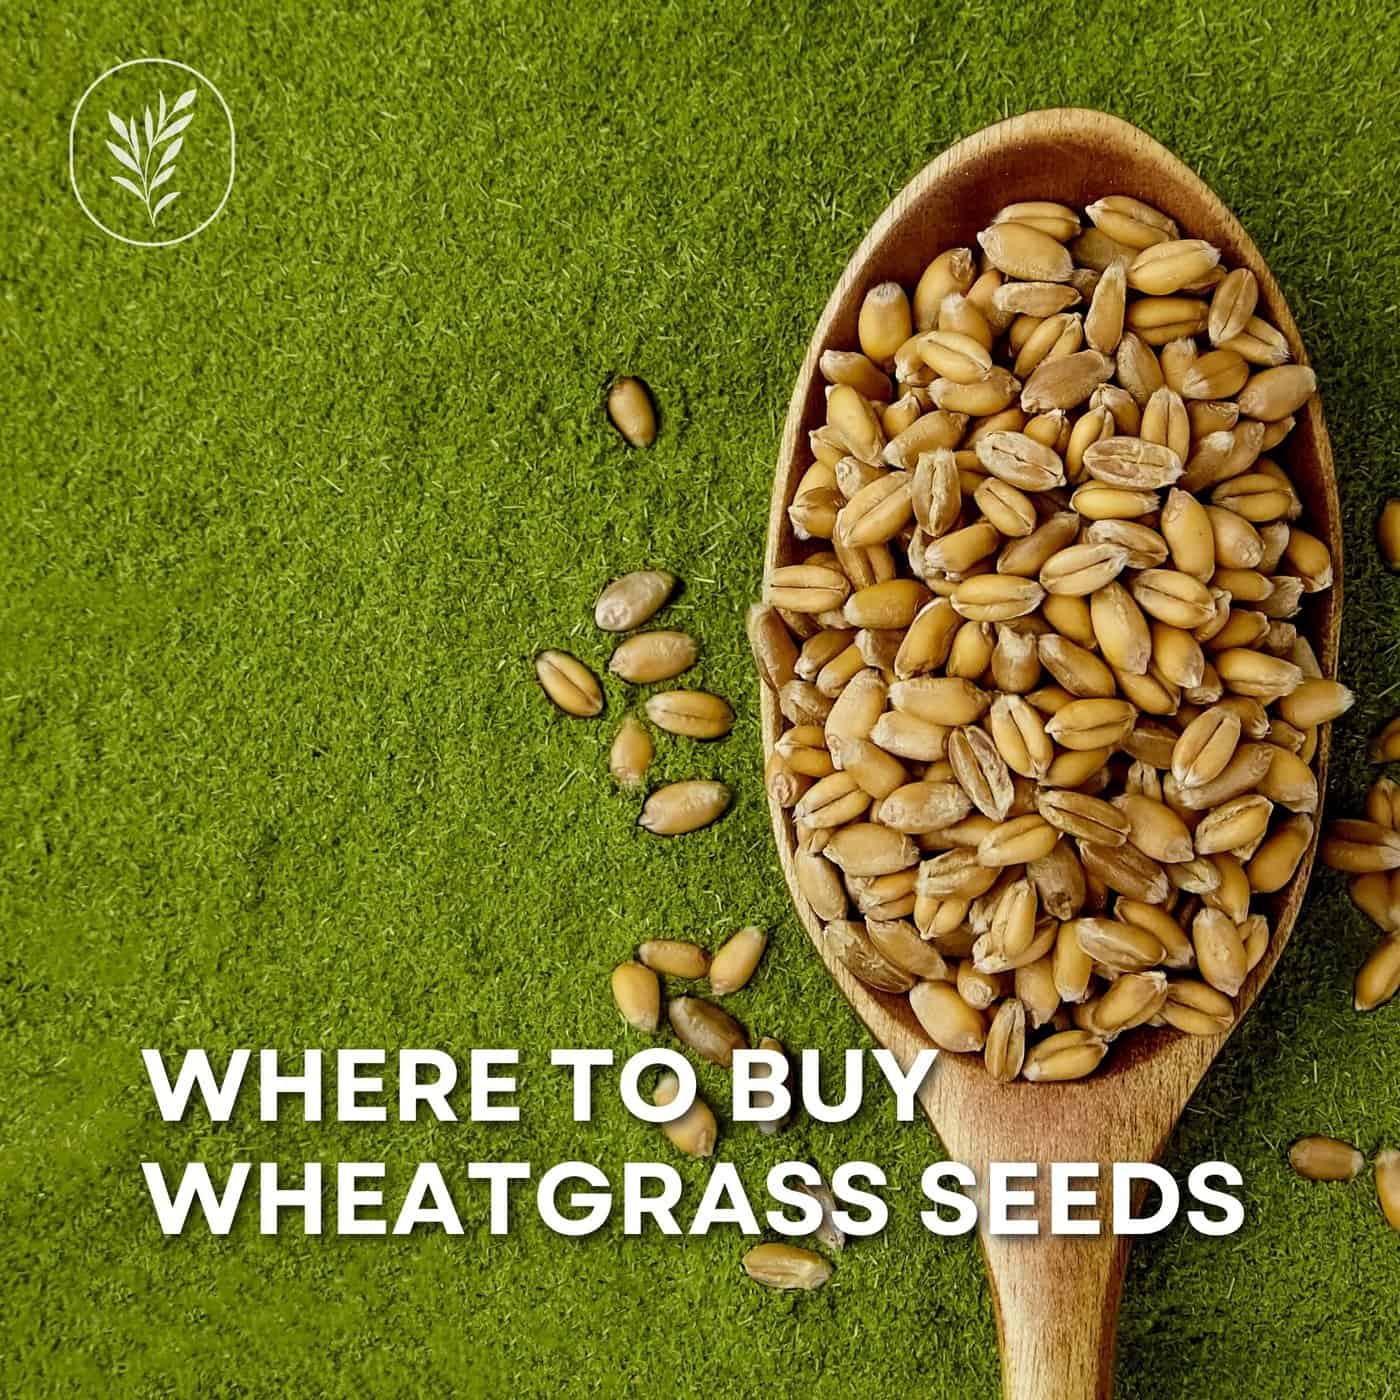 Where to buy wheatgrass seeds via @home4theharvest